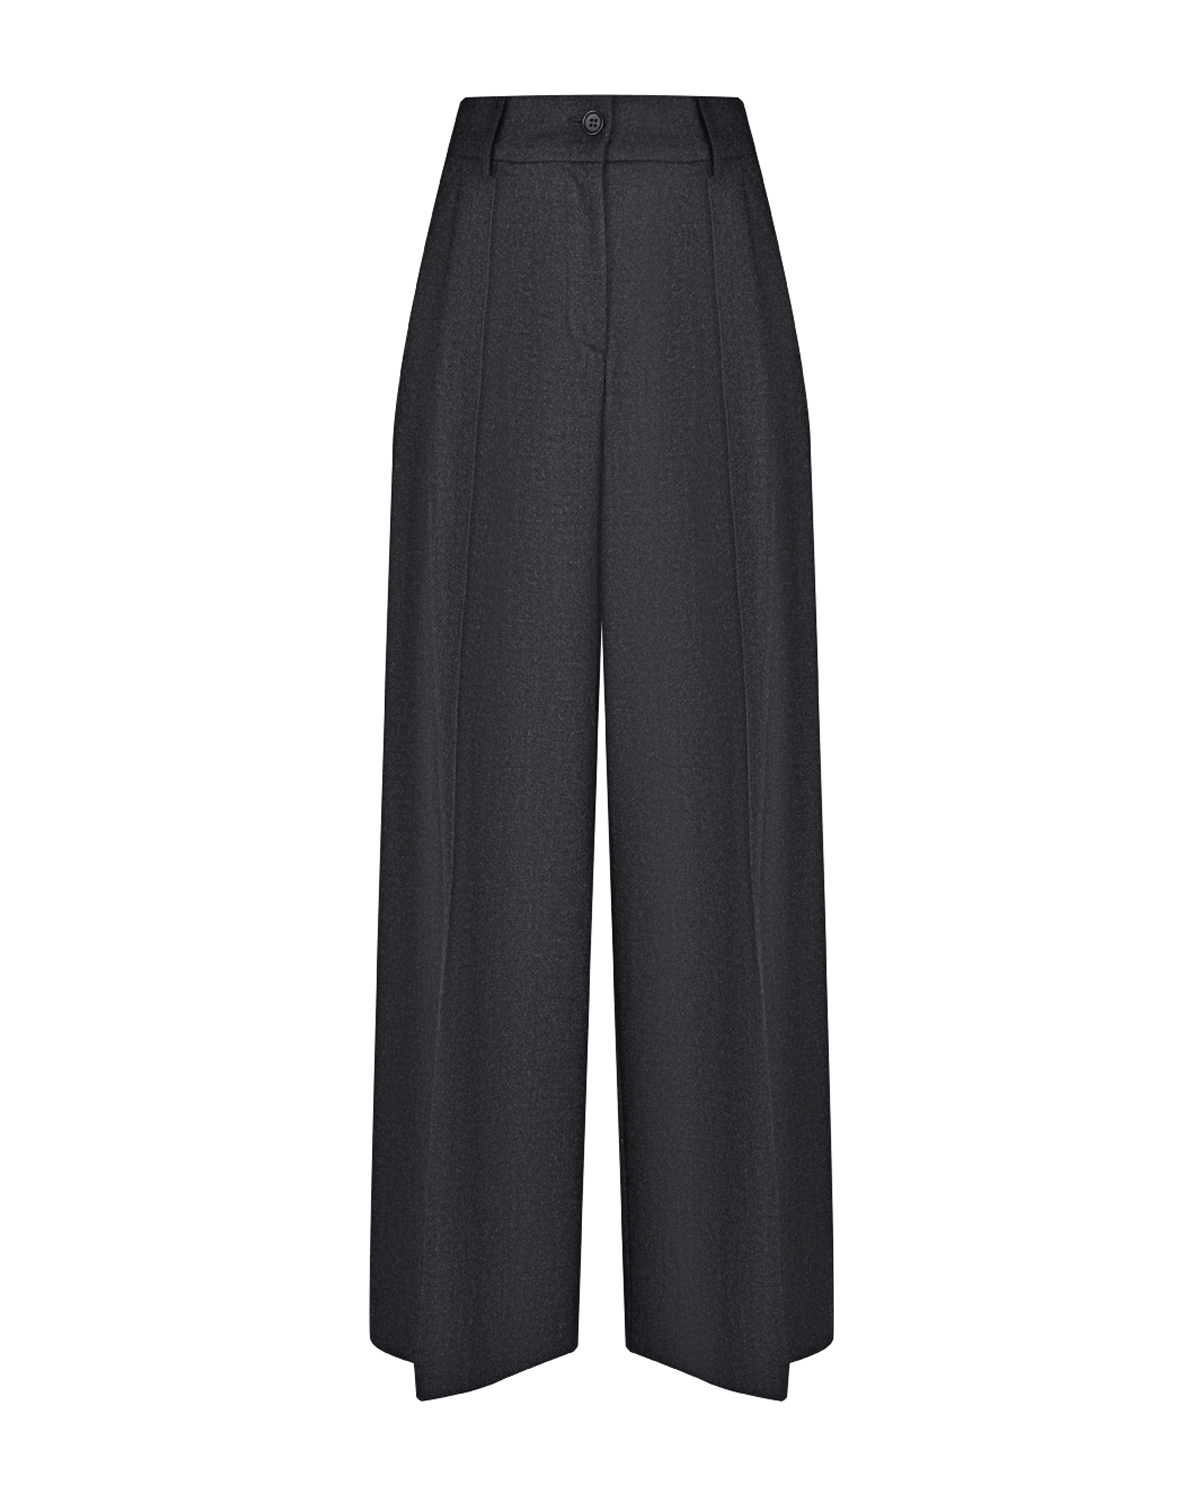 Серые шерстяные брюки палаццо Parosh, размер 42, цвет серый - фото 1